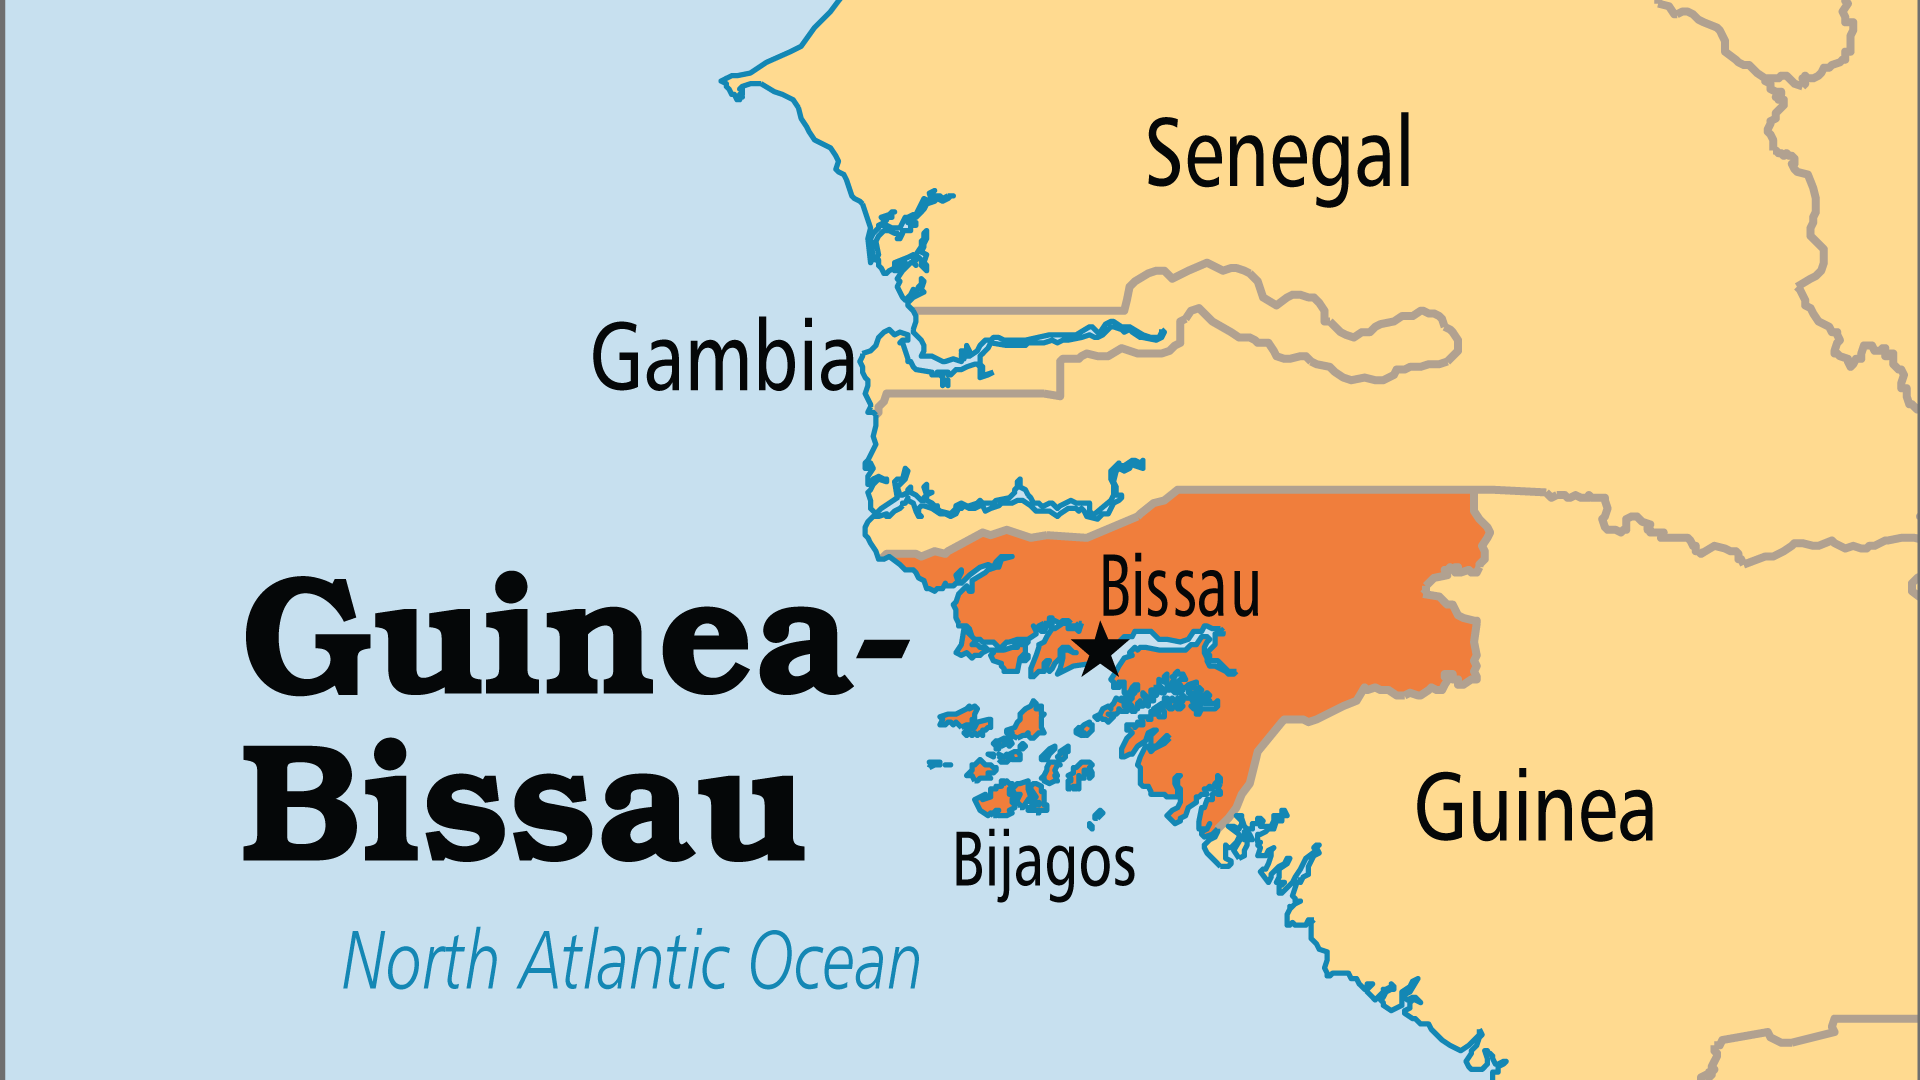 Map of Guinea-Bissau